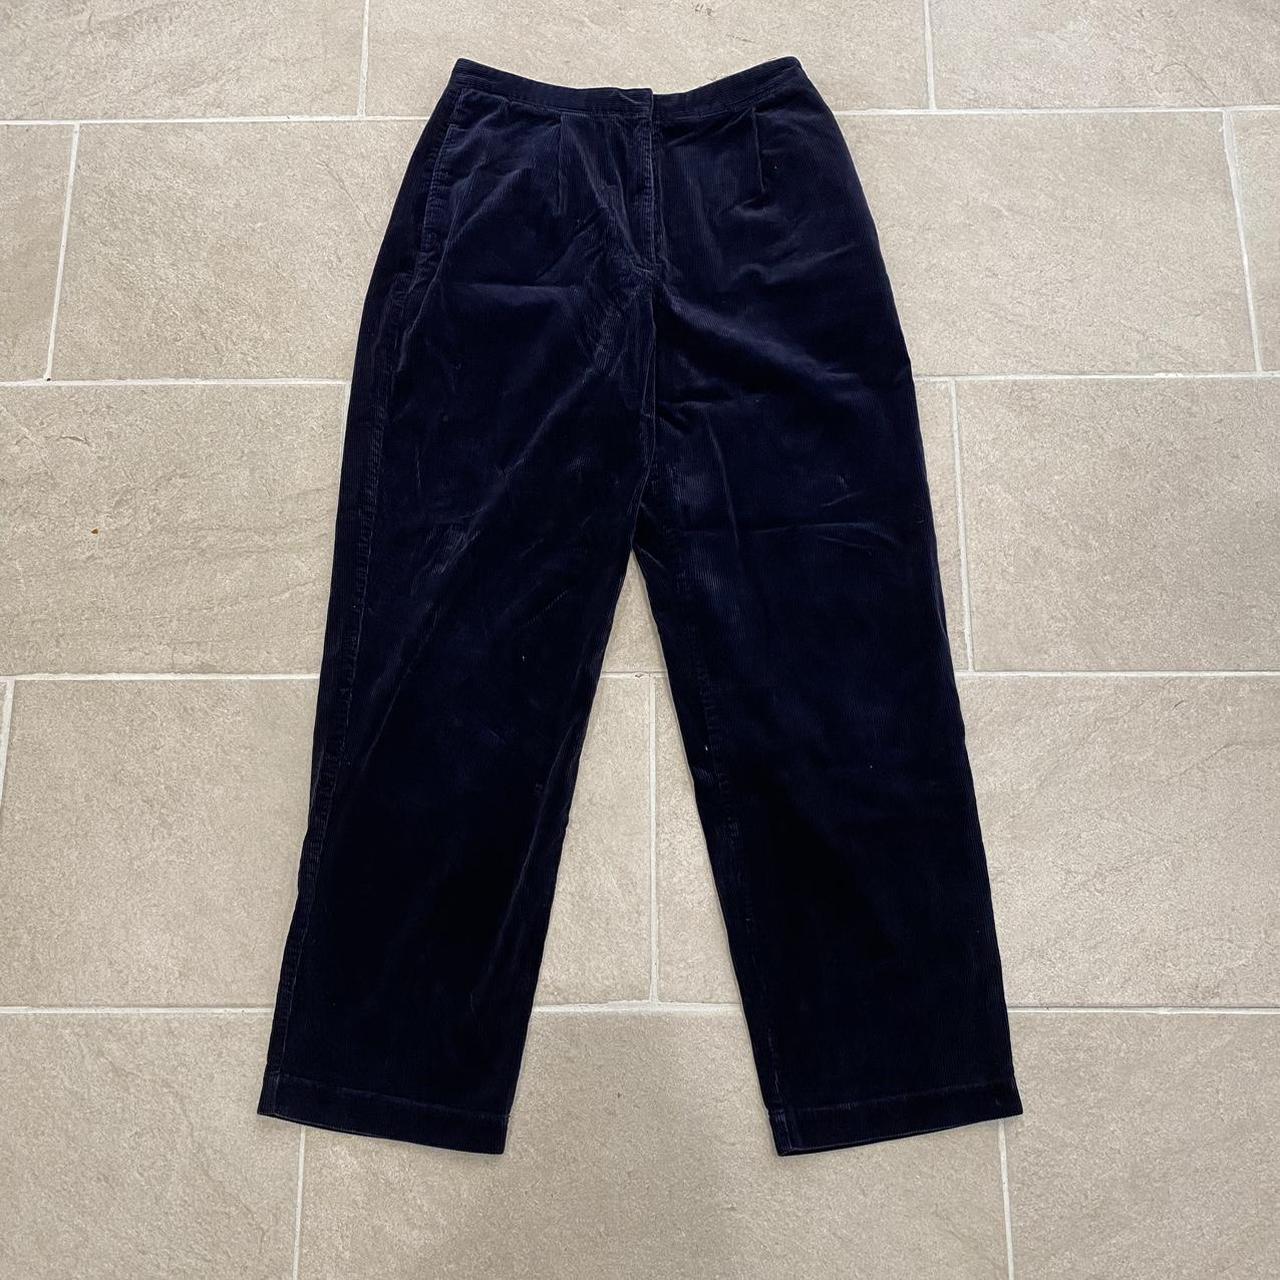 Vintage 90s blue corduroy pants. High quality thin... - Depop